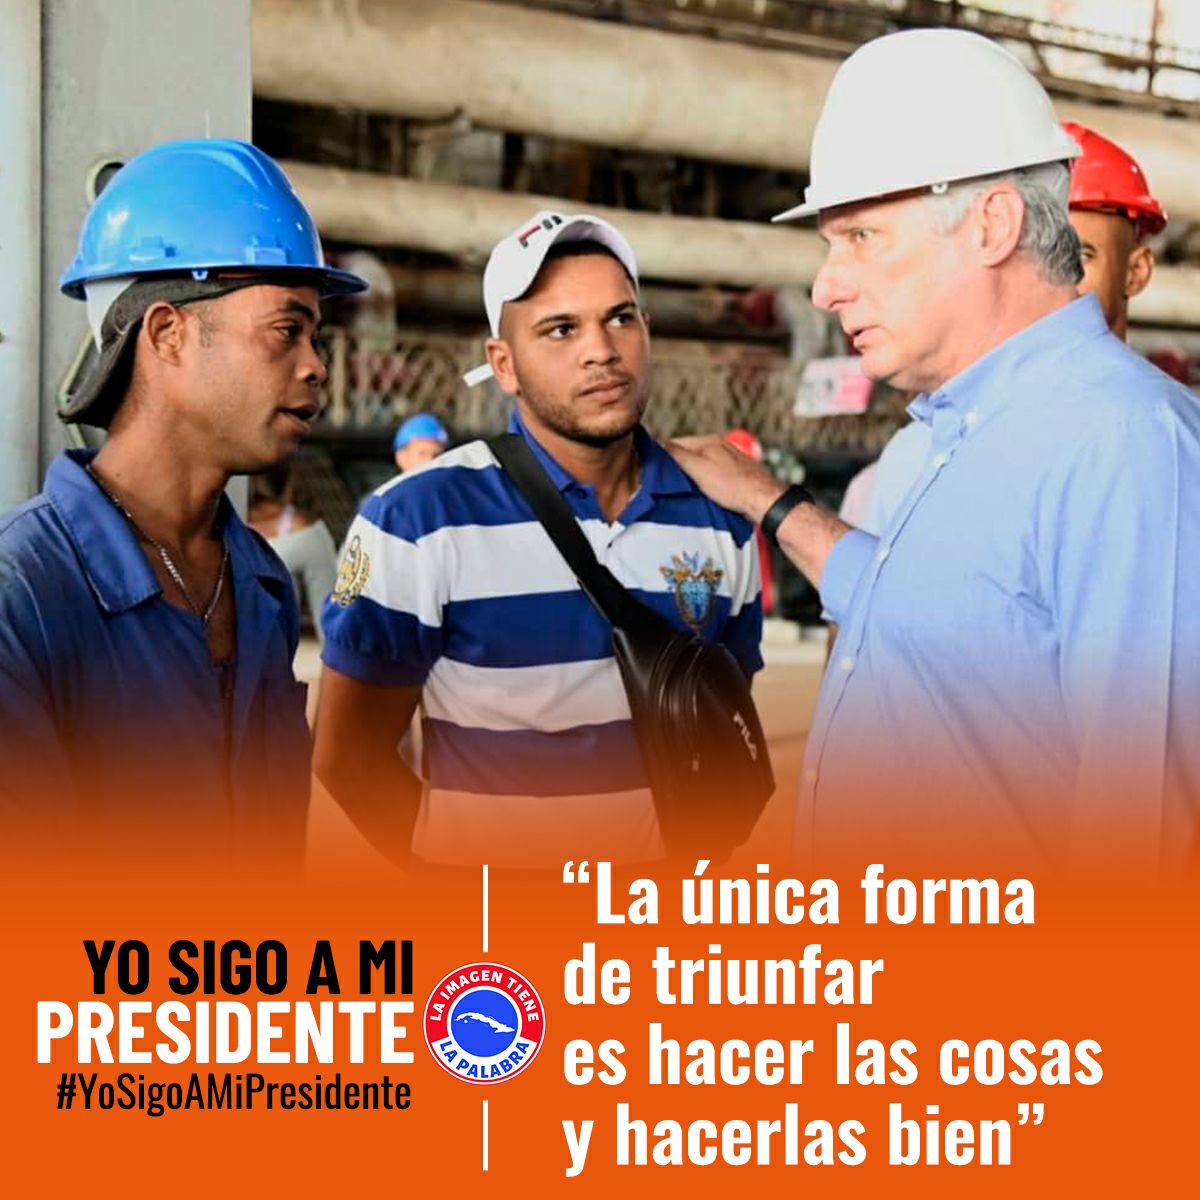 #YoSigoAMiPresidente. #EstaEsLaRevolución #CubaEnPaz #FidelPorSiempre #JuntosSomosMásFuertes